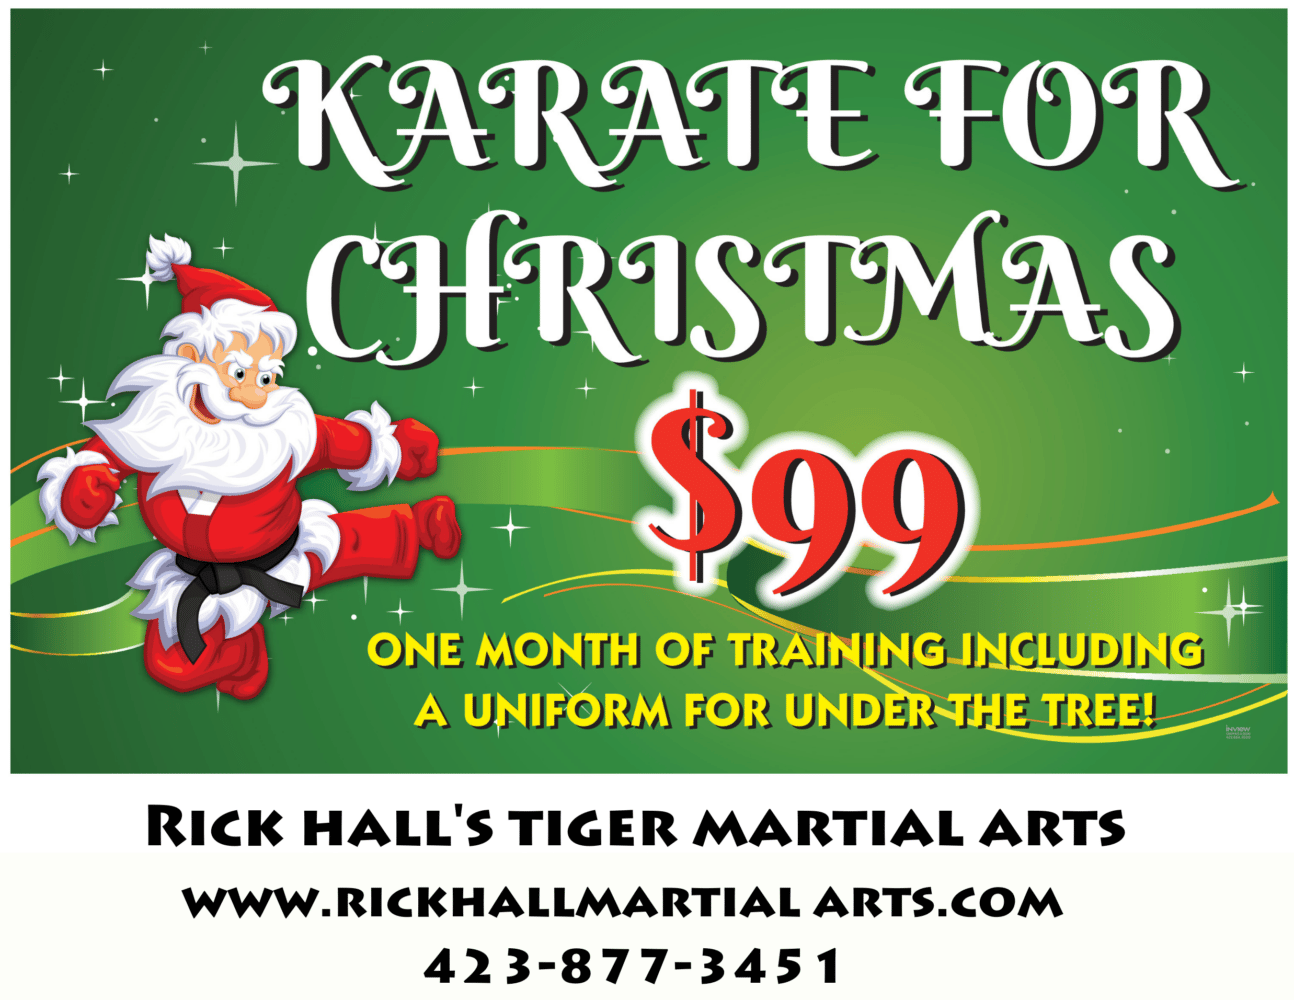 Rick Hall's Tiger Martial Arts Karate for Christmas